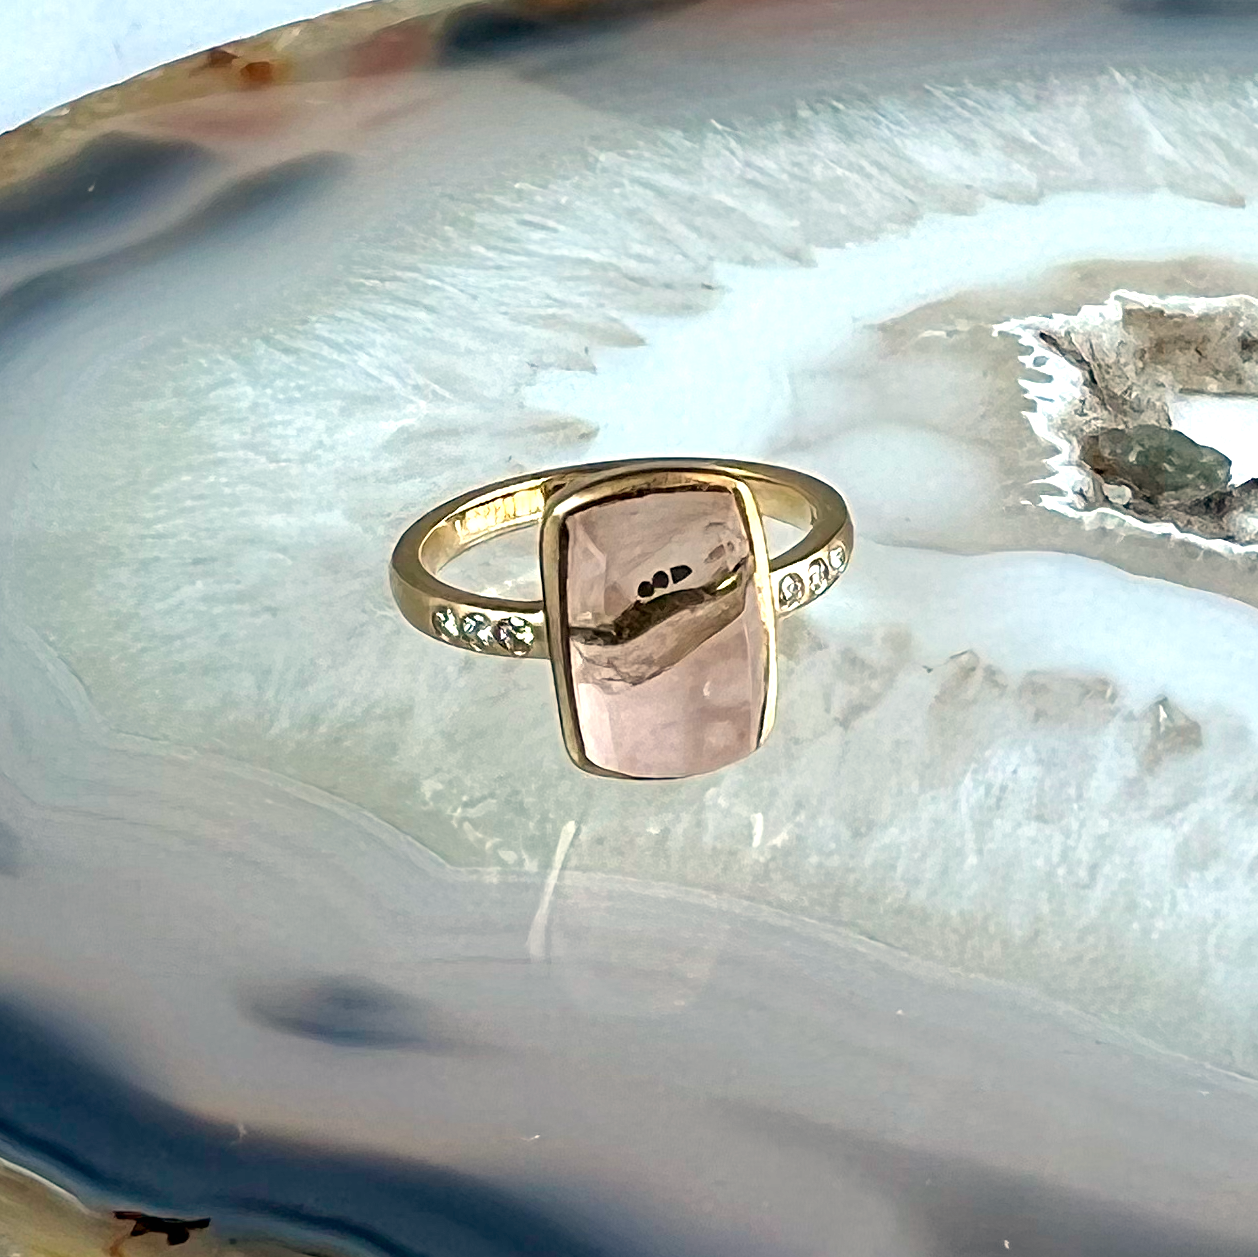 Kintsugi Rose Quartz Gold Ring with Diamonds